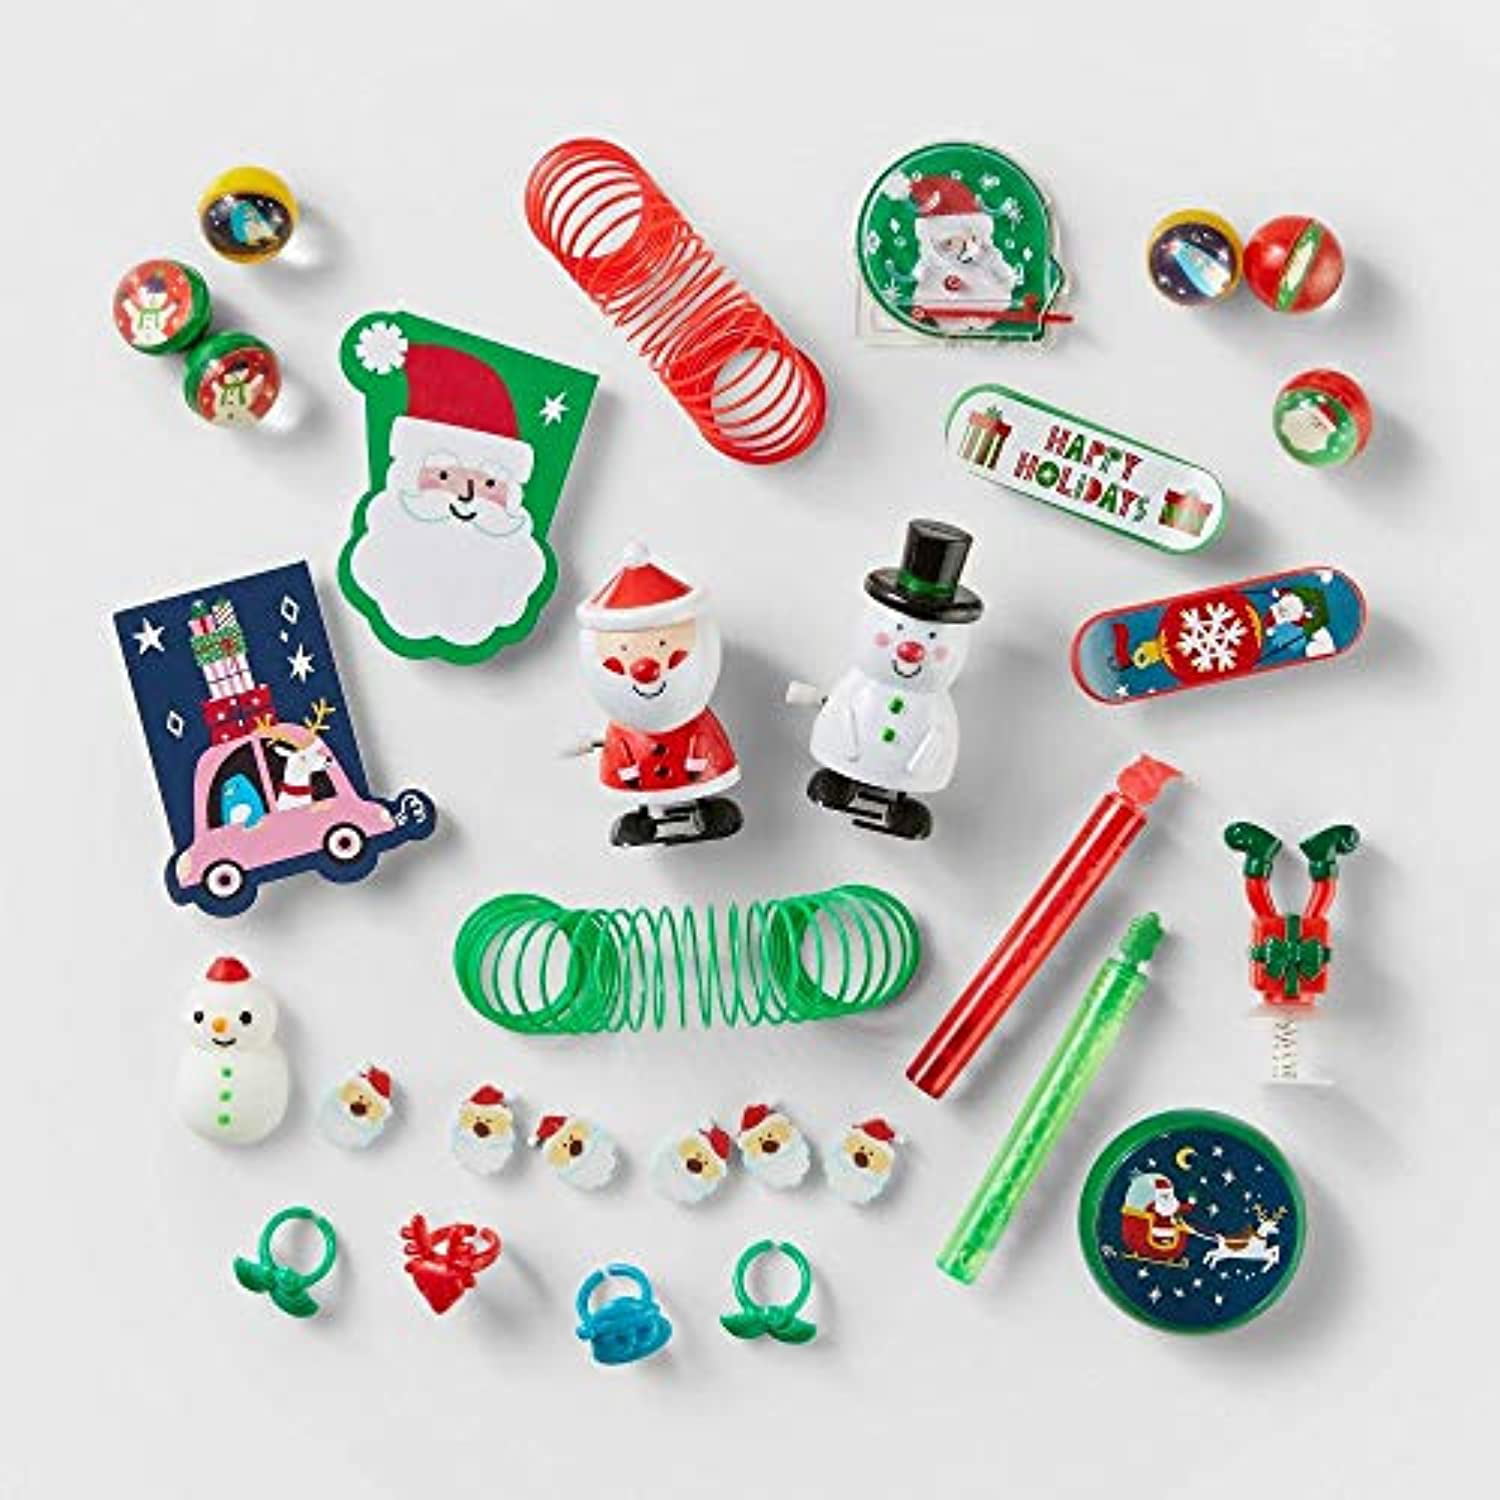 Wondershop 12 Days of Christmas Punch Box Advent Calendar Filler Kit   New 